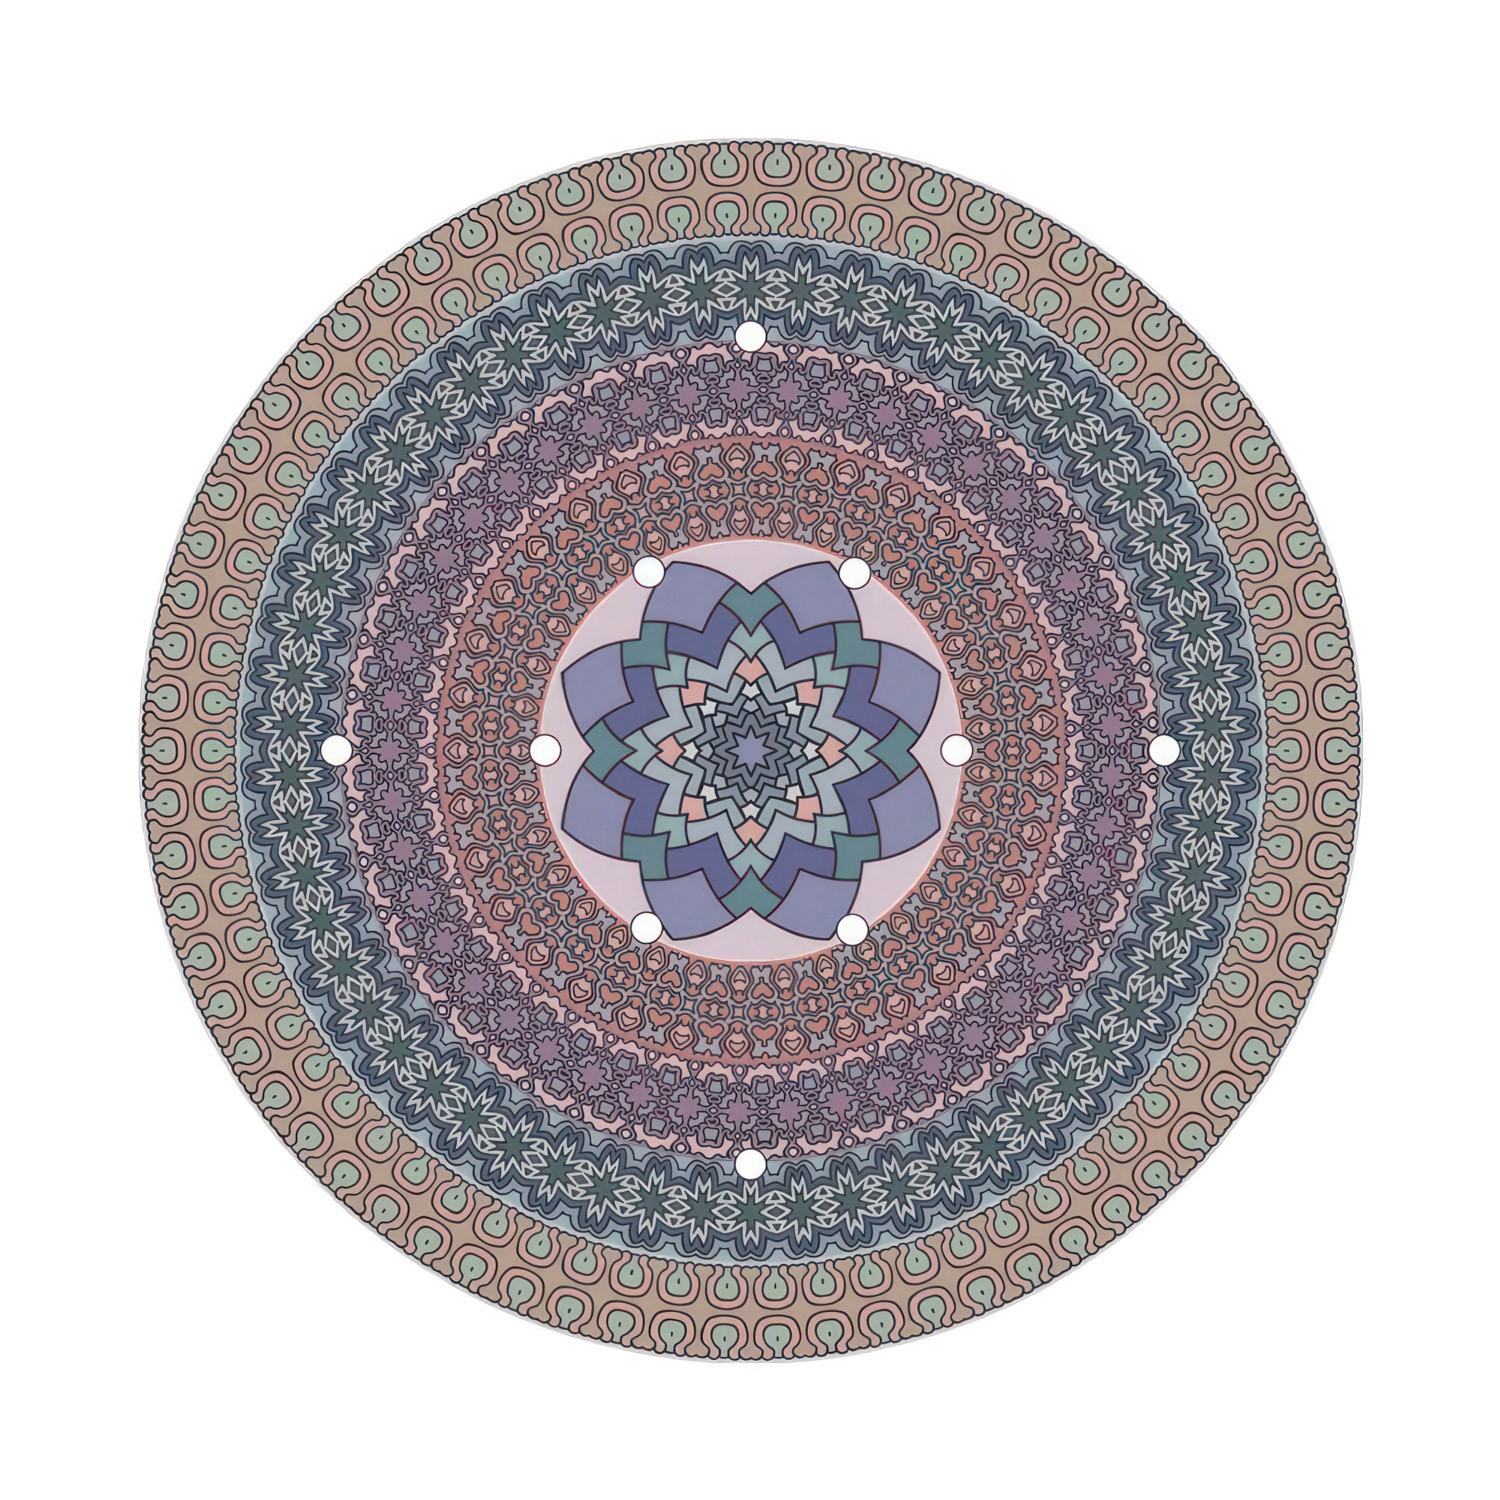 Velika okrugla dekoracija za stropnu rozetu 400 mm - Rose-One sistem s 10 rupa i 4 bočne rupe - PROMO